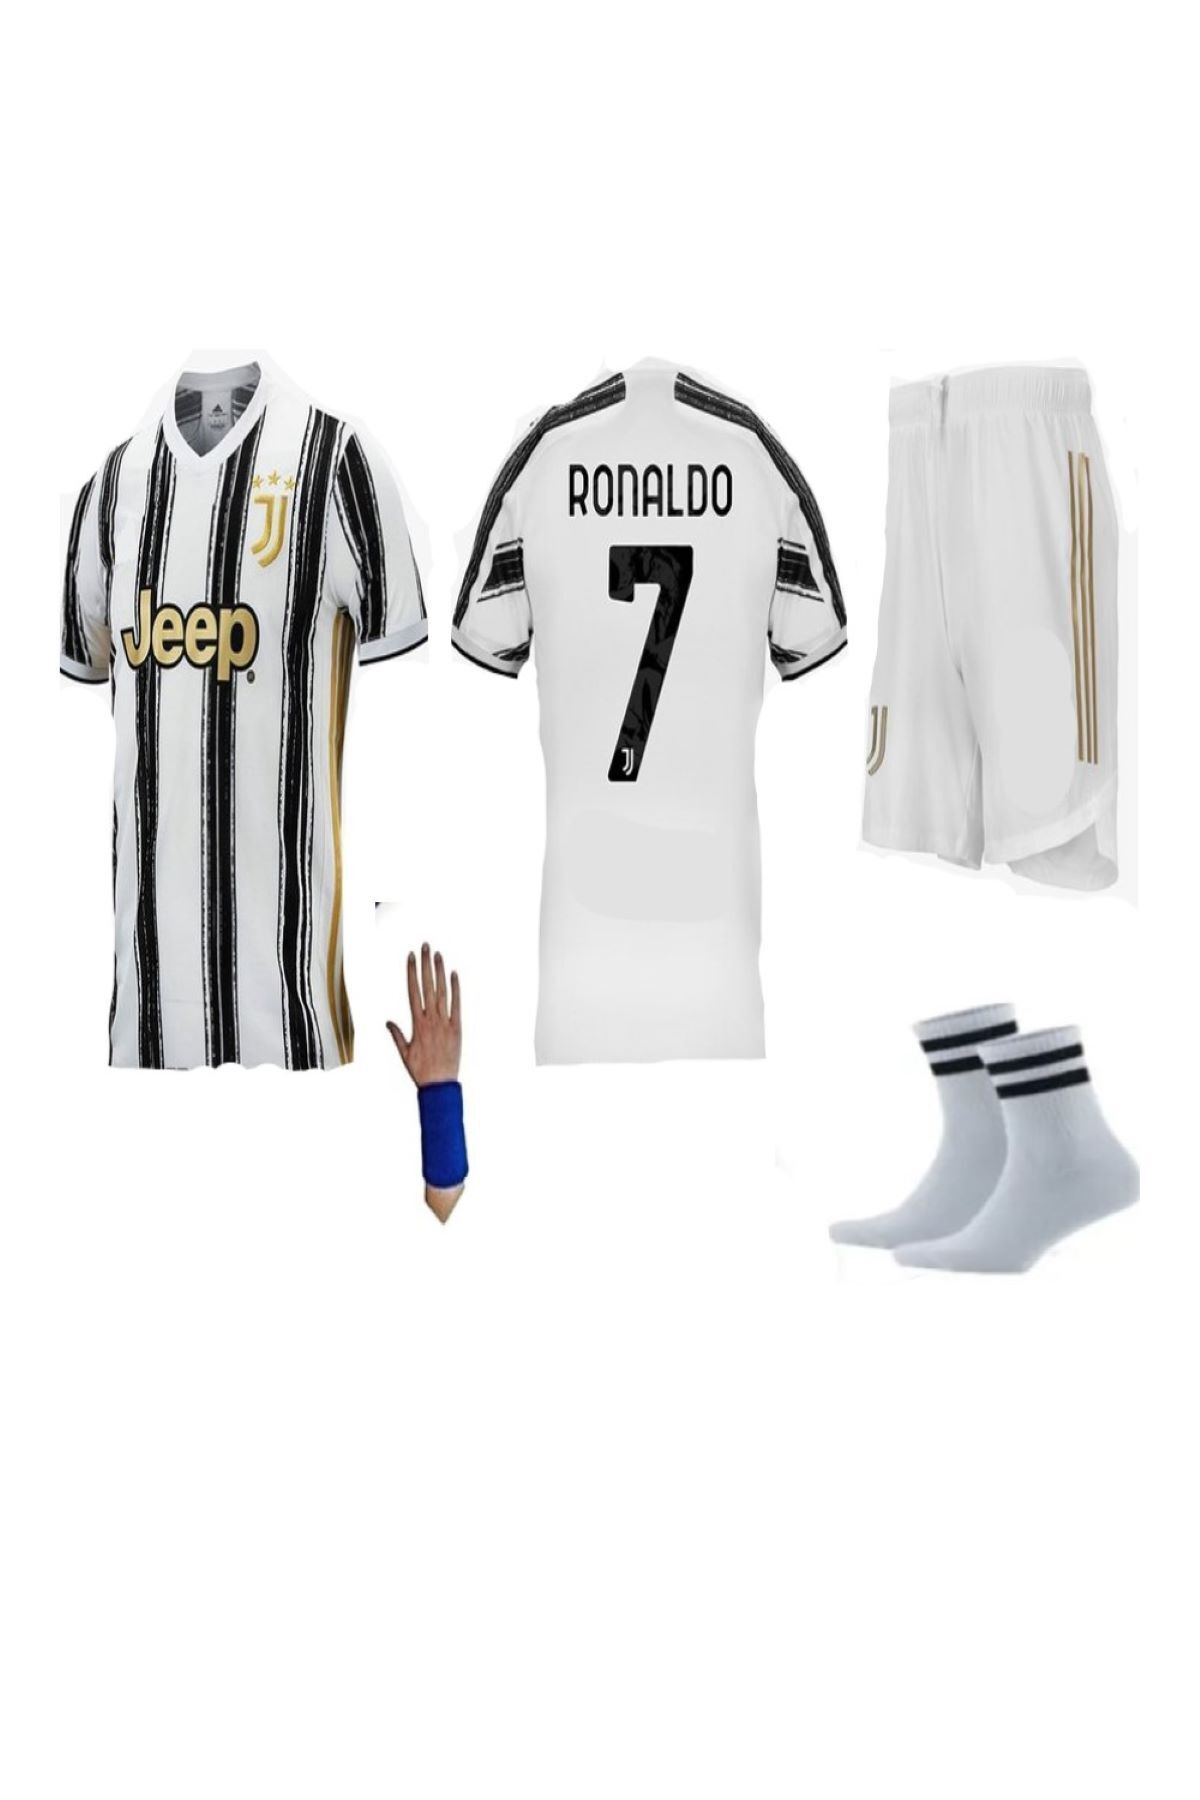 yenteks Cristiano Juventus Ronaldo Beyaz 21/22 Sezon Retro 4'lü Set Çocuk Futbol Forması Ioı15